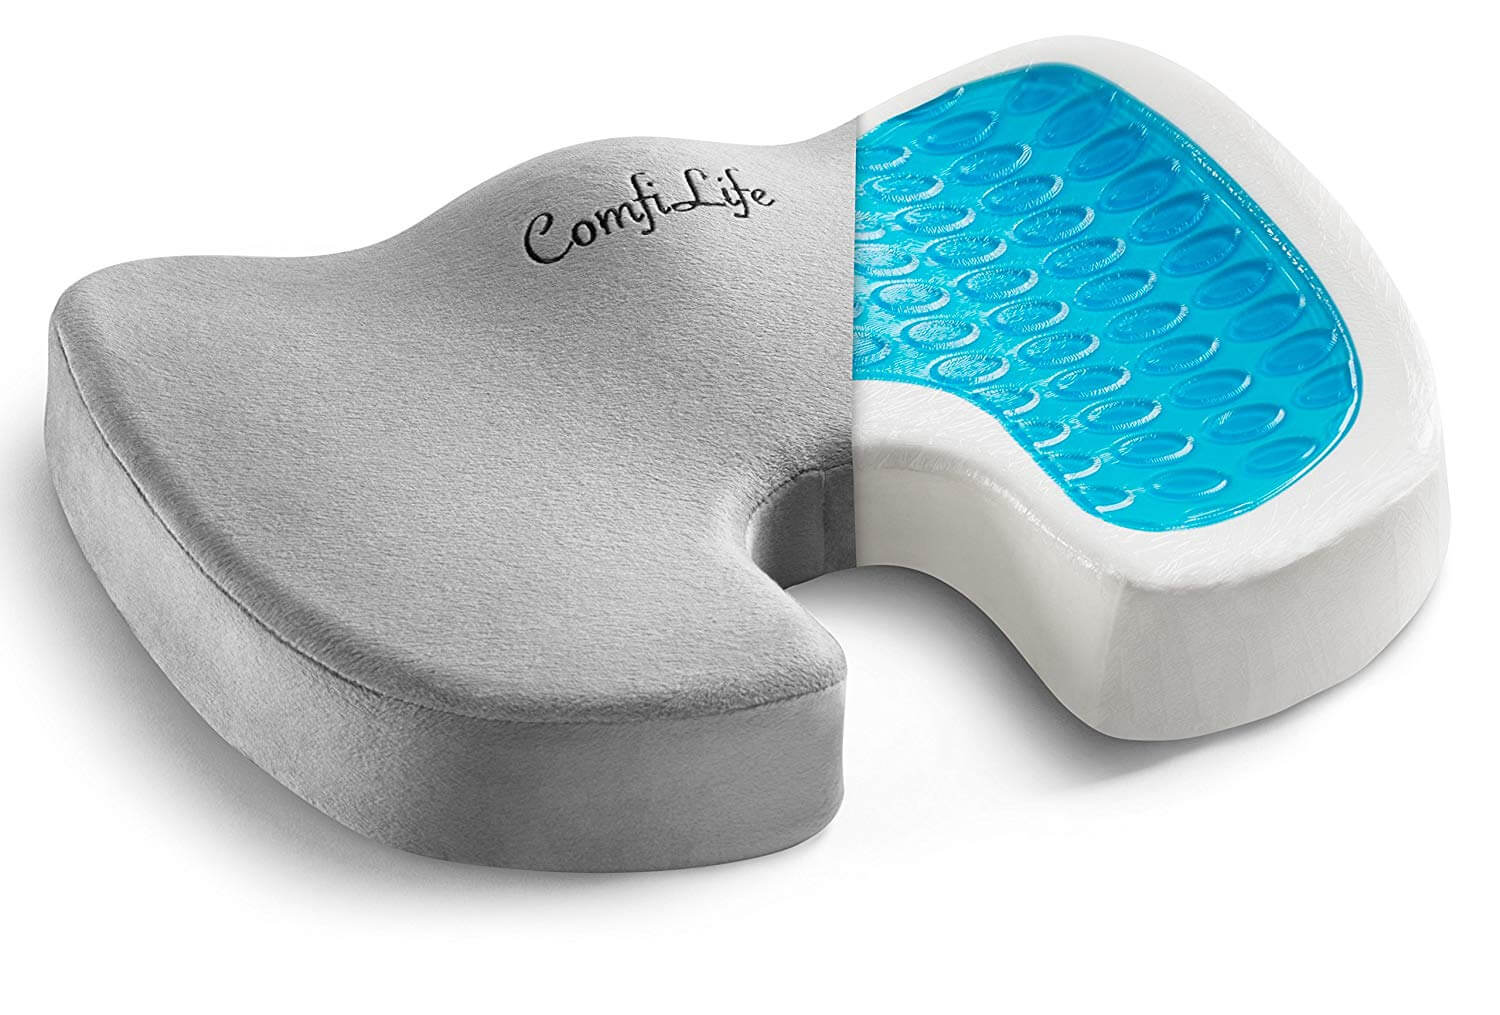 ComfiLife Gel-Enhanced Non-slip Coccyx Memory Foam Seat Cushion